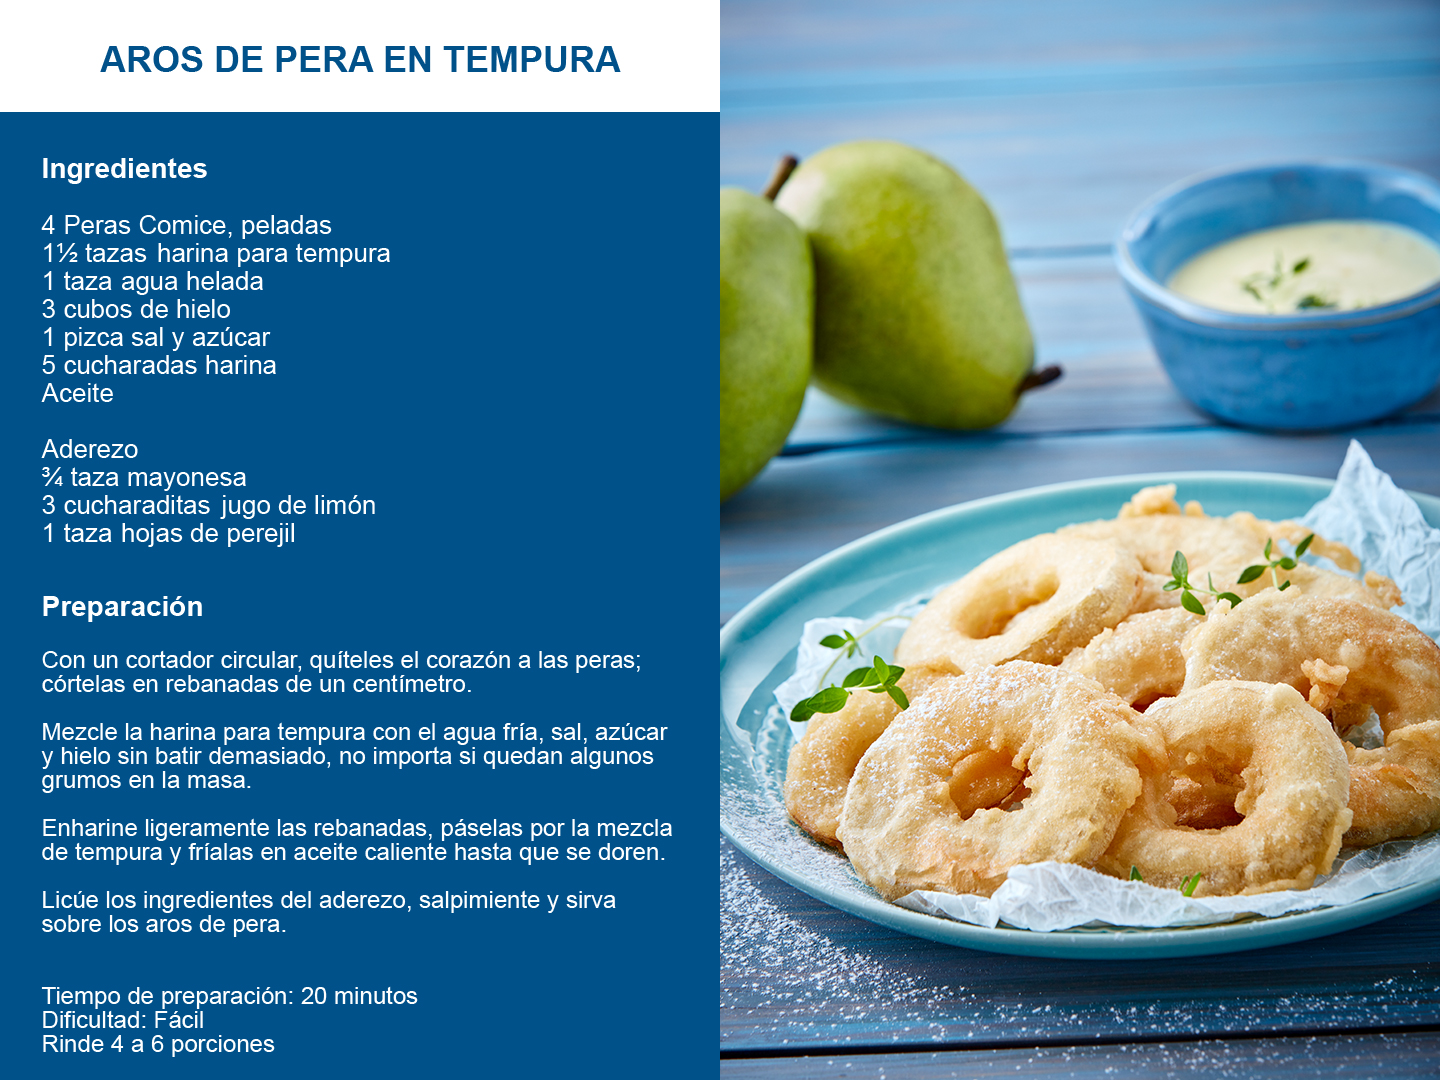 Aros de pera en tempura